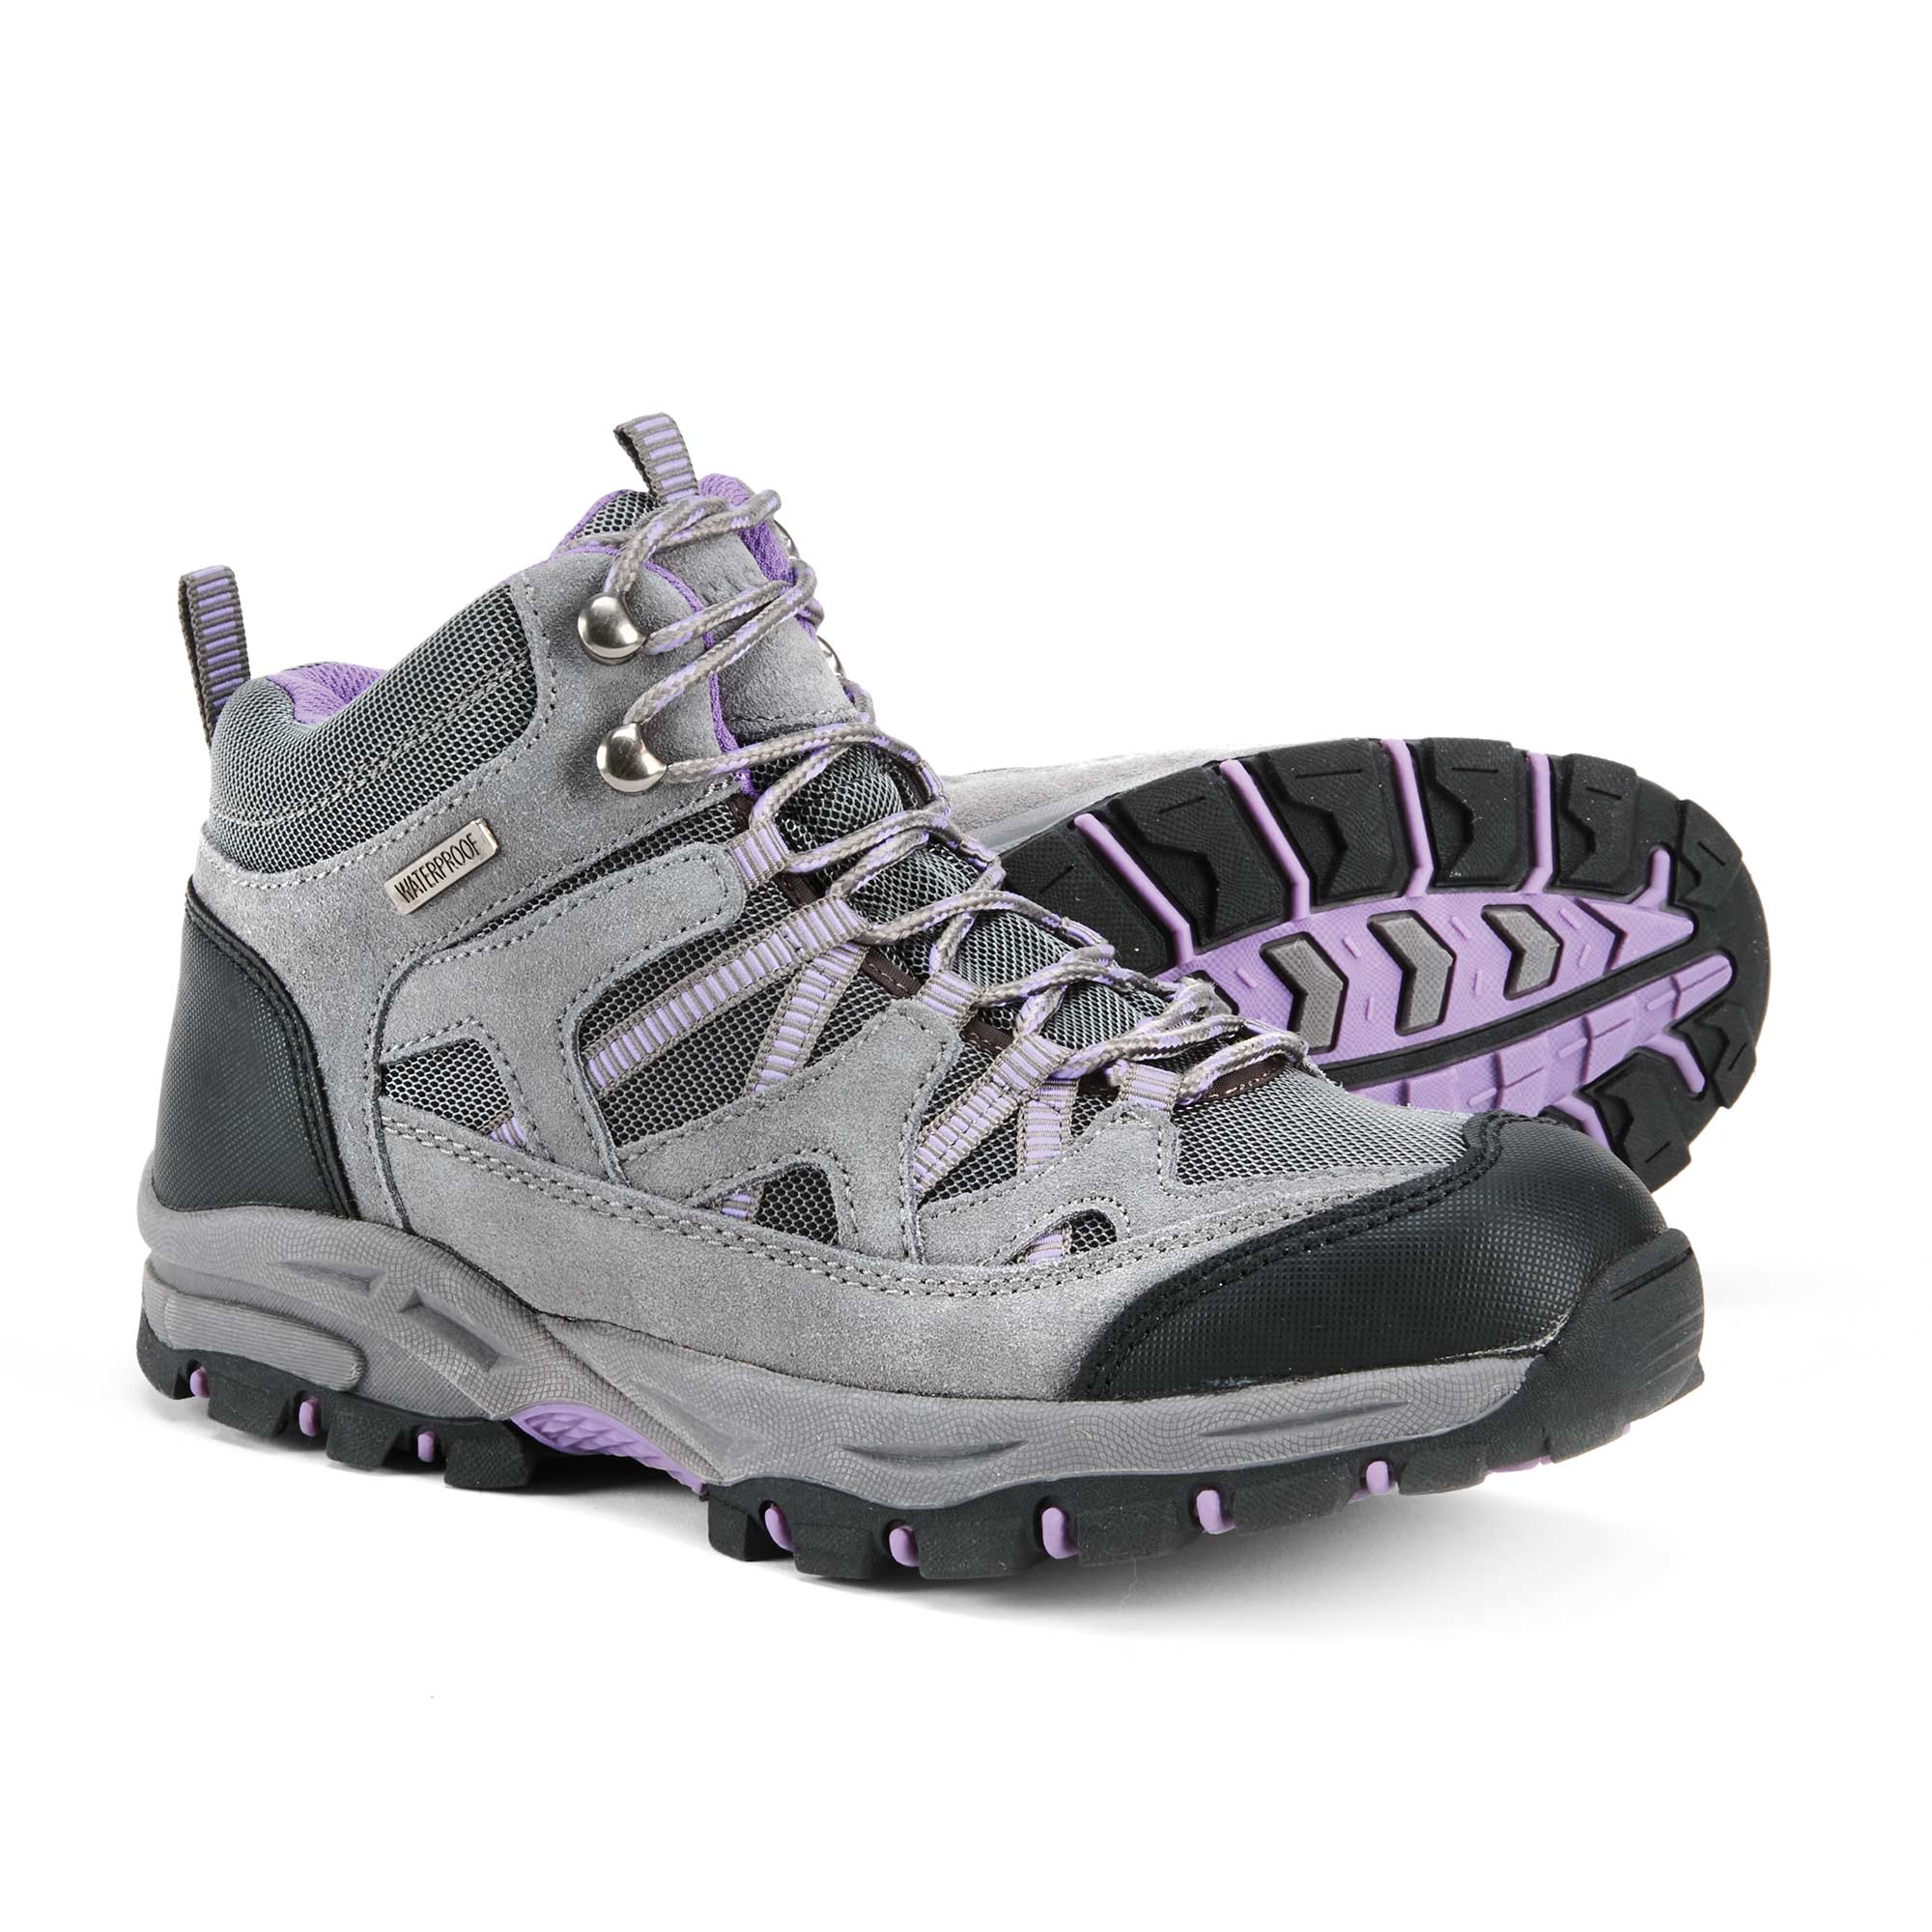 Itasca Women's Waterproof Hiking Boots - Grey